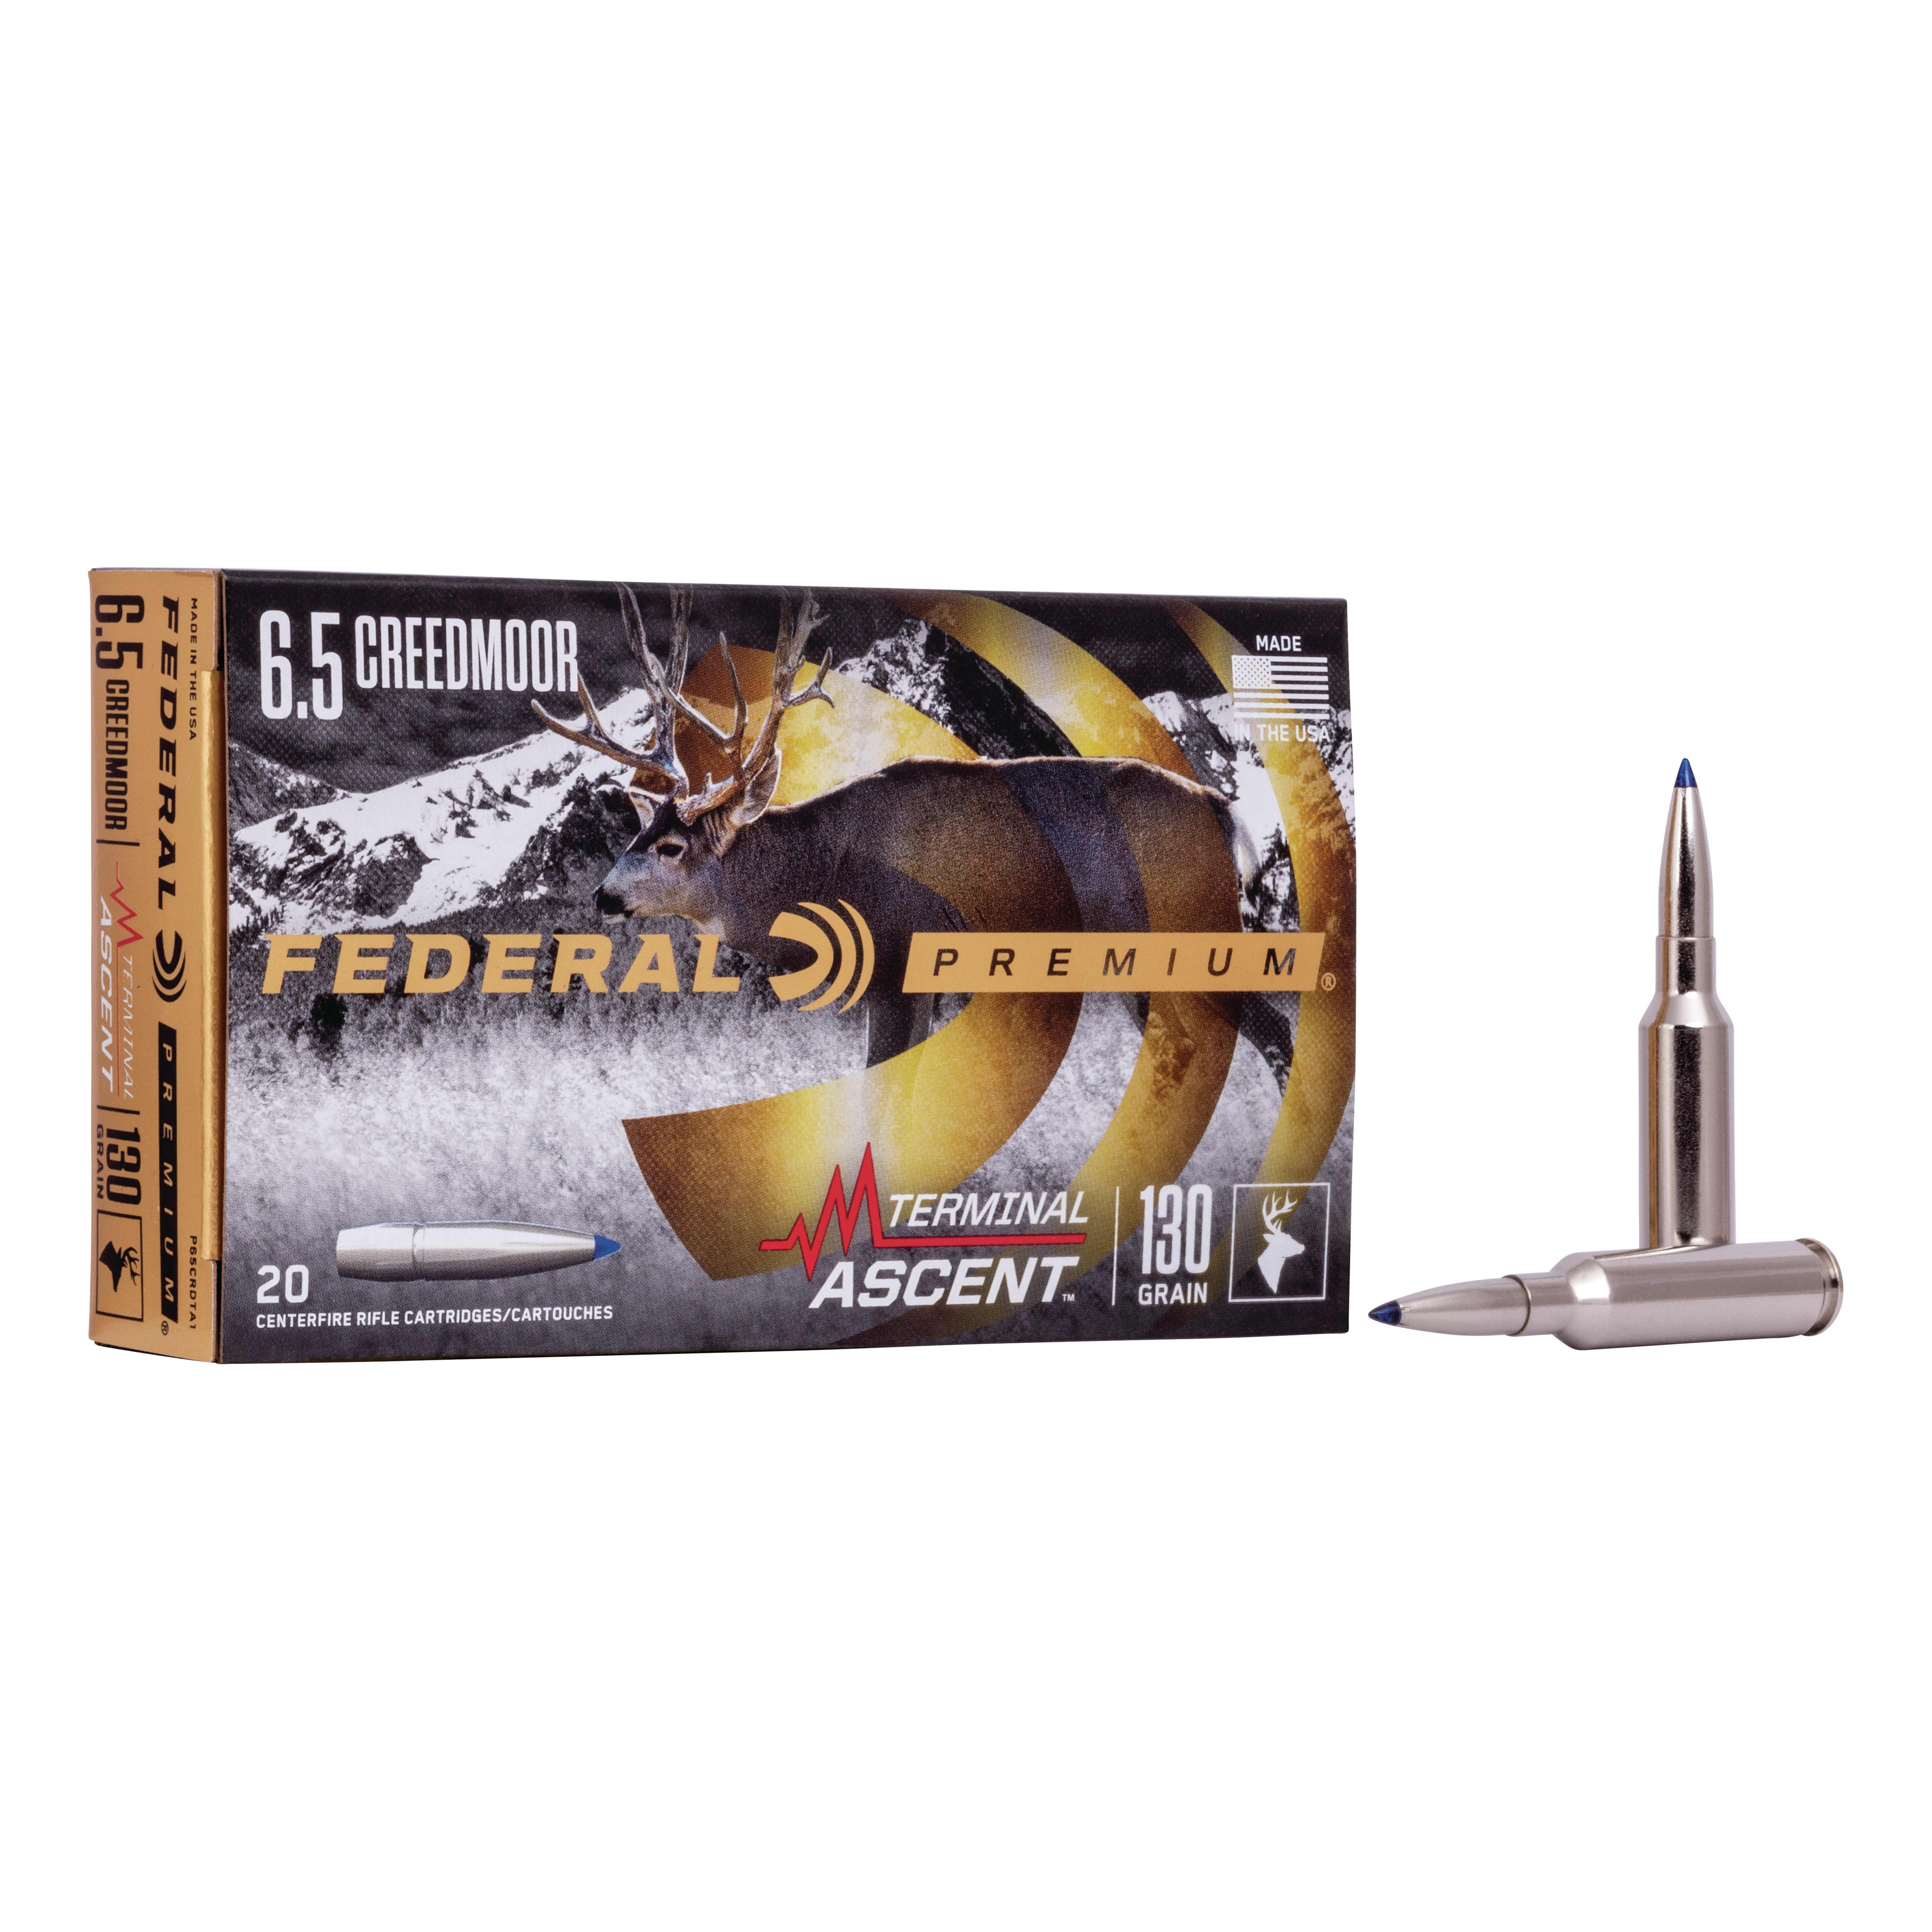 Federal® Premium Terminal Ascent Ammunition